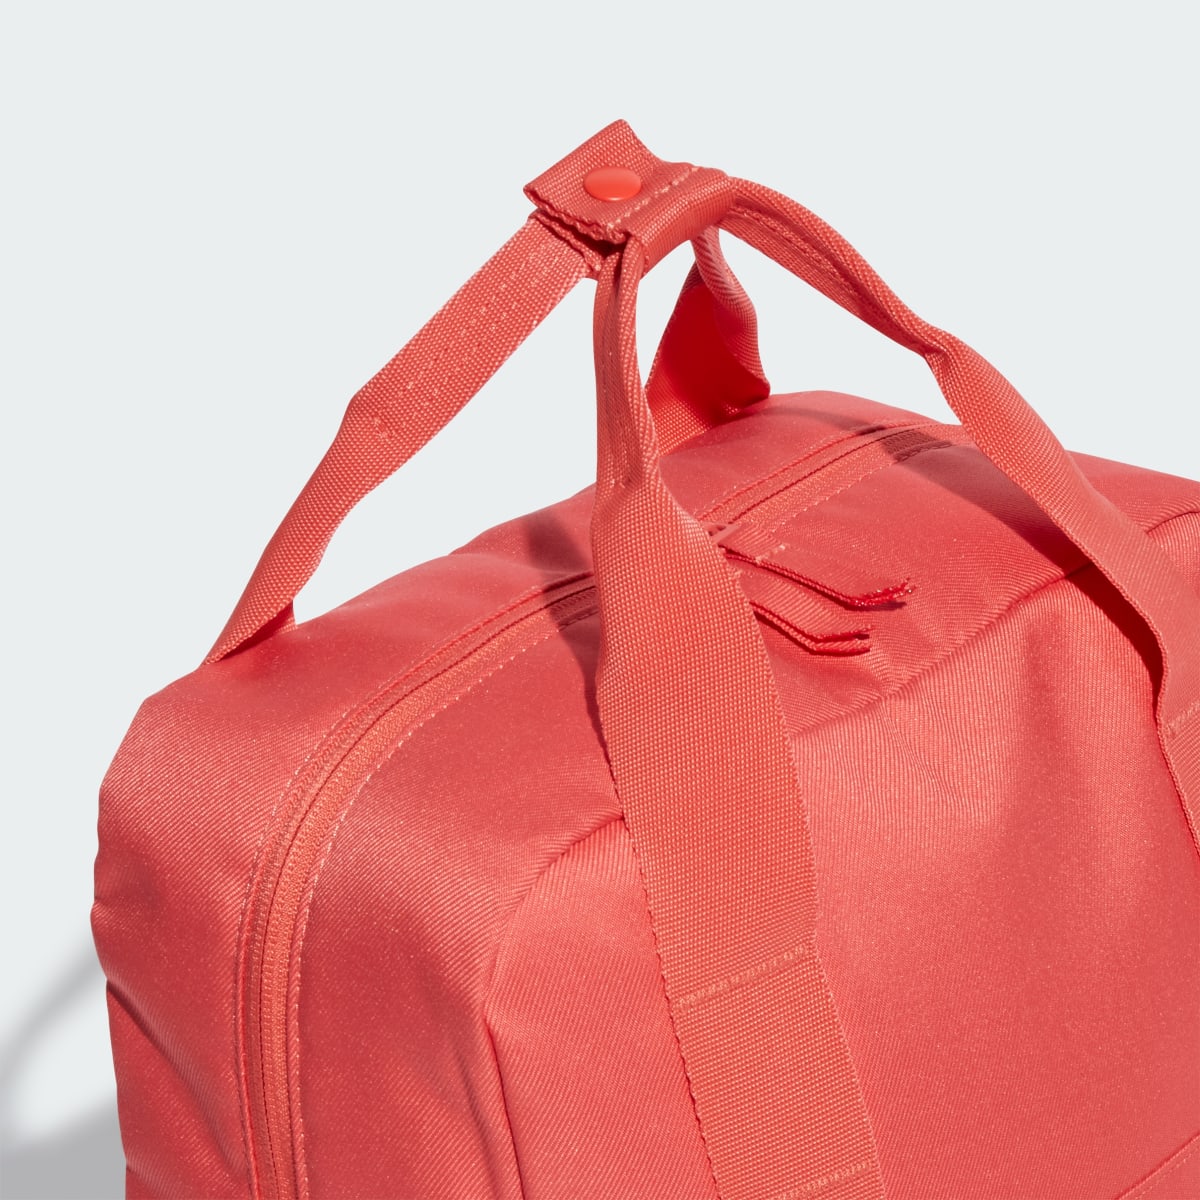 Adidas Prime Backpack. 5